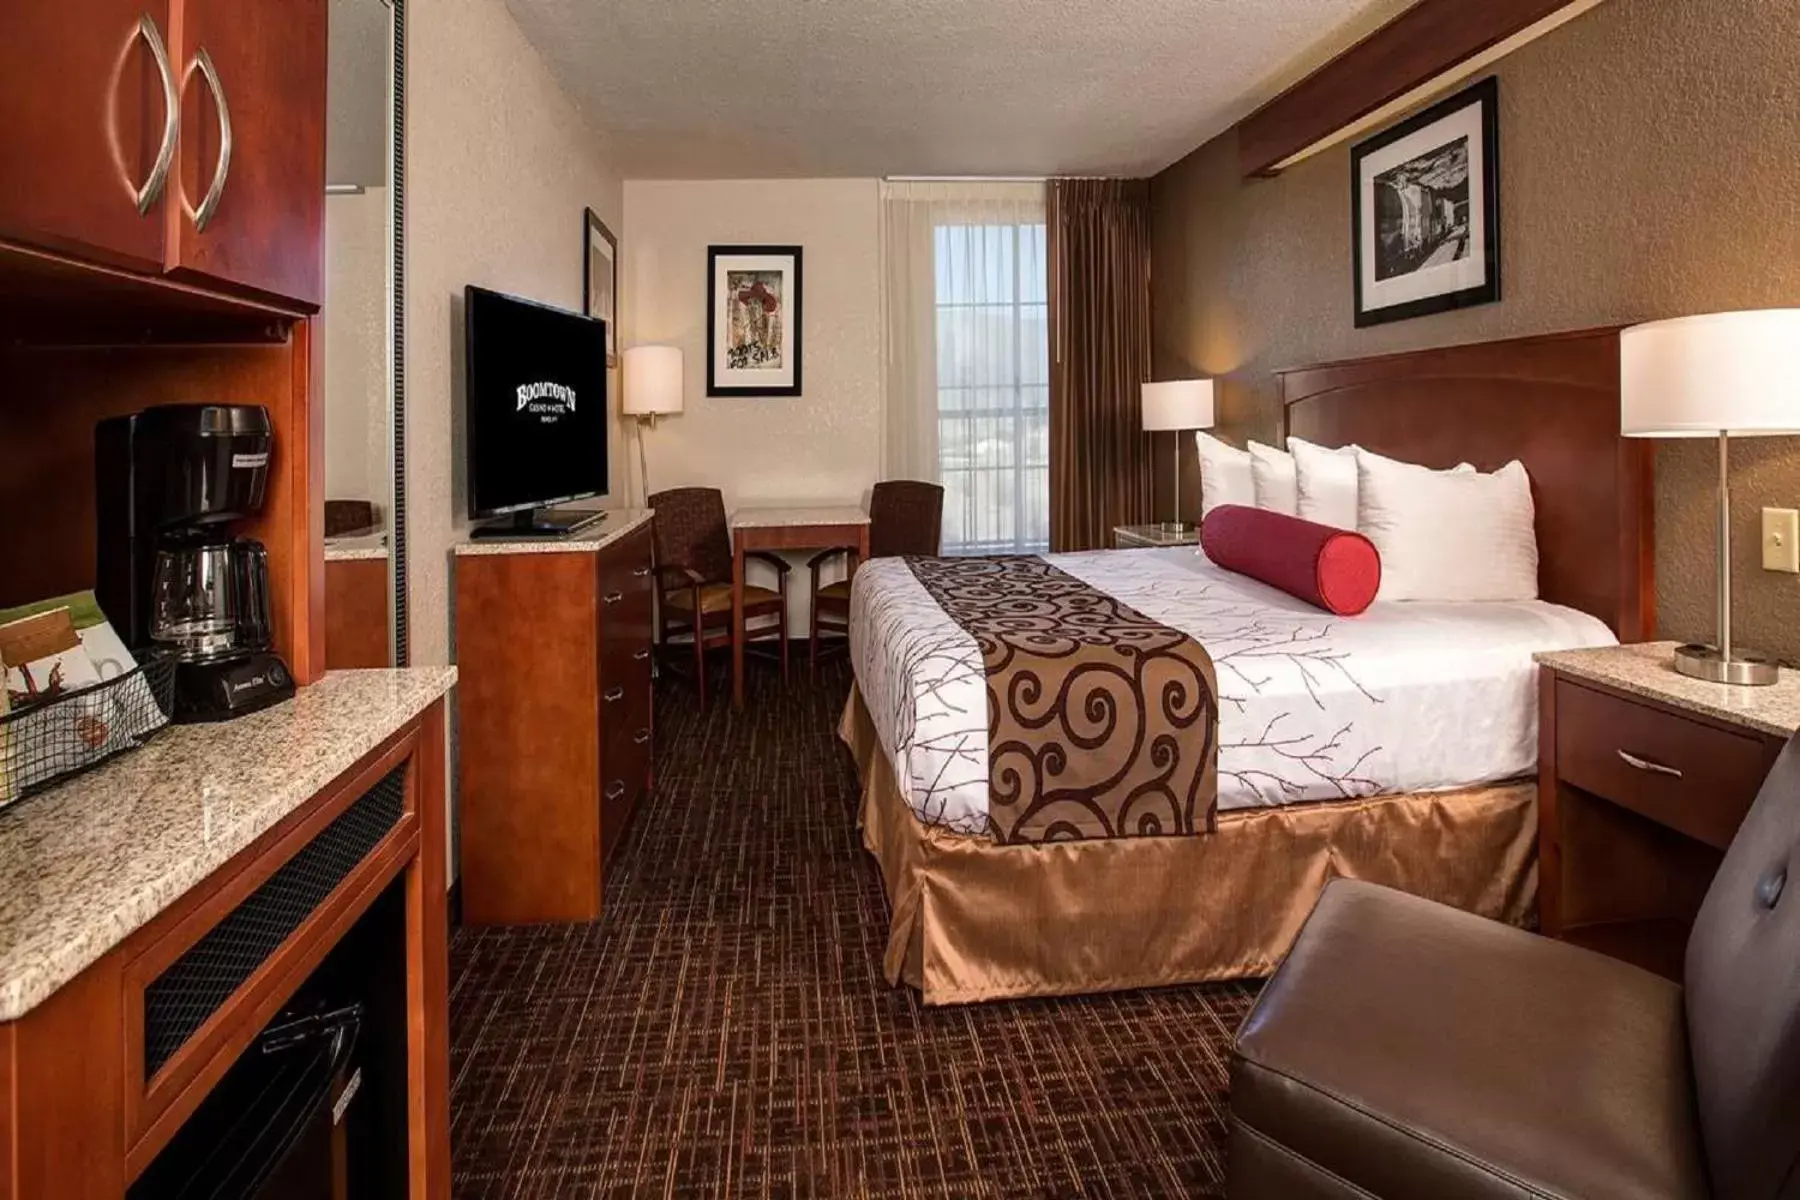 Bed in Best Western Plus Boomtown Casino Hotel